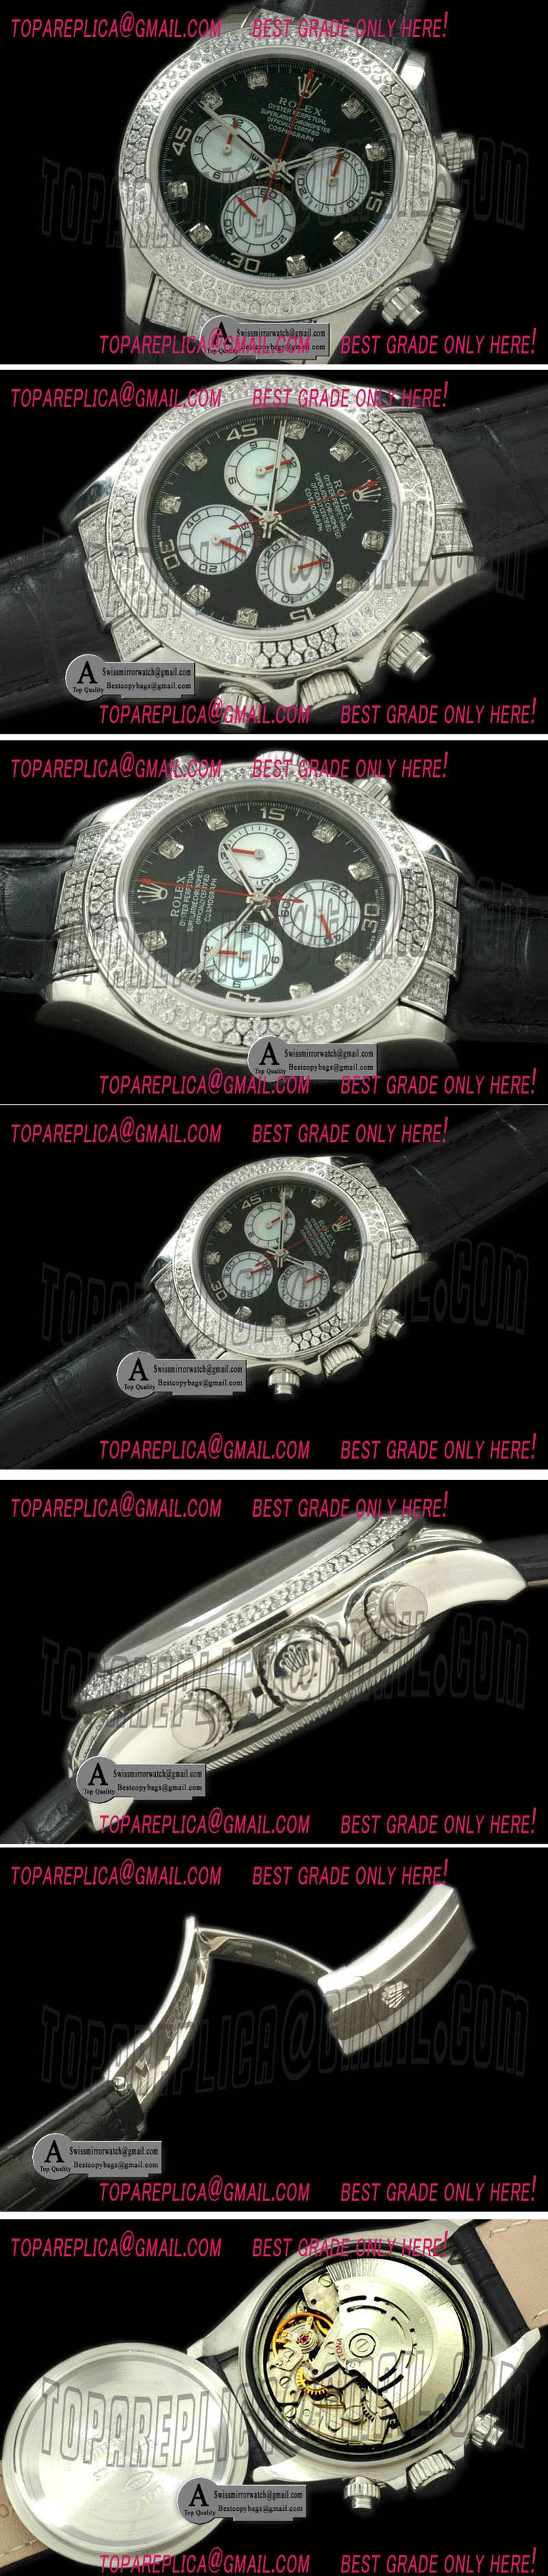 Rolex Daytona 2011 SS Diamond Leather Blacl White Diamond A 7750 Sec@6 28800 Replica Watches